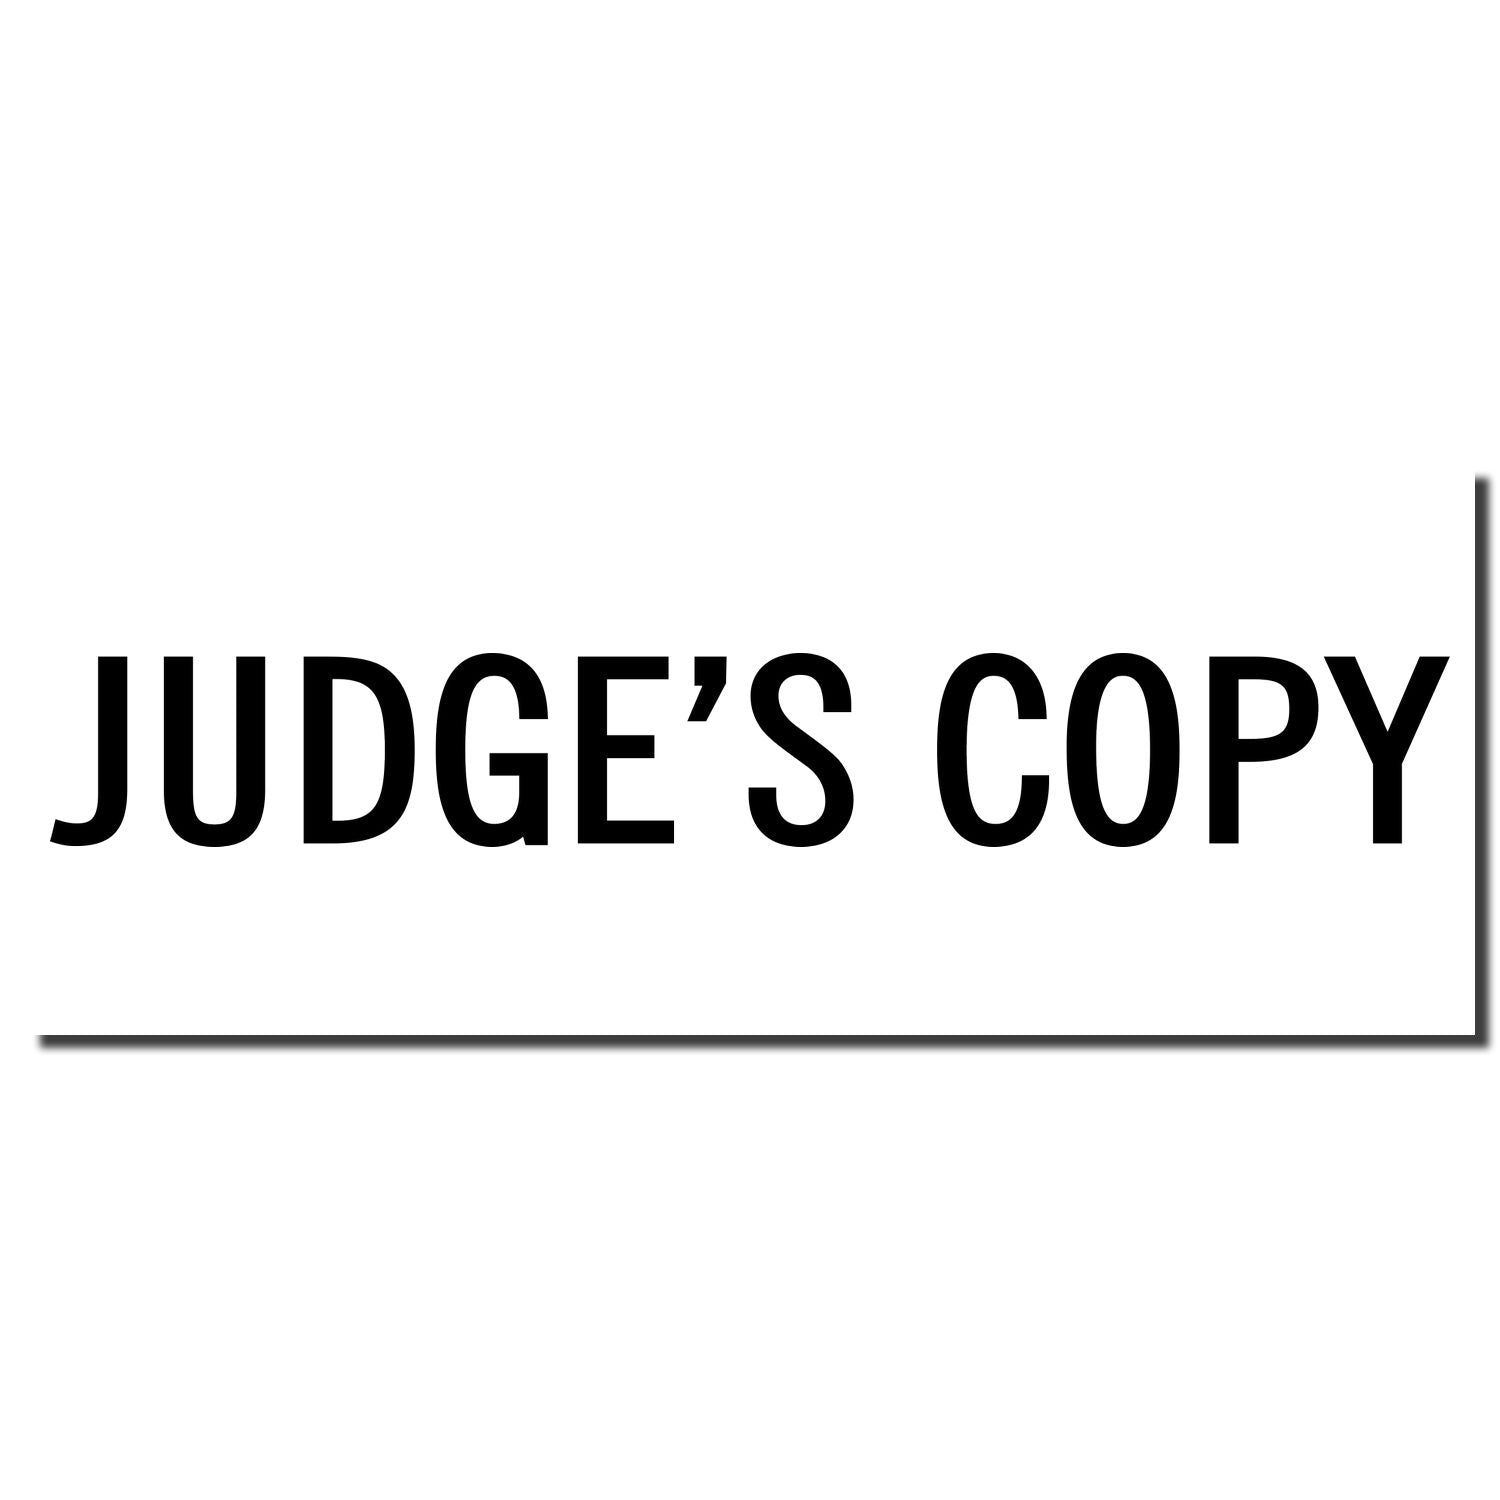 Enlarged Imprint Self-Inking Judge's Copy Stamp Sample